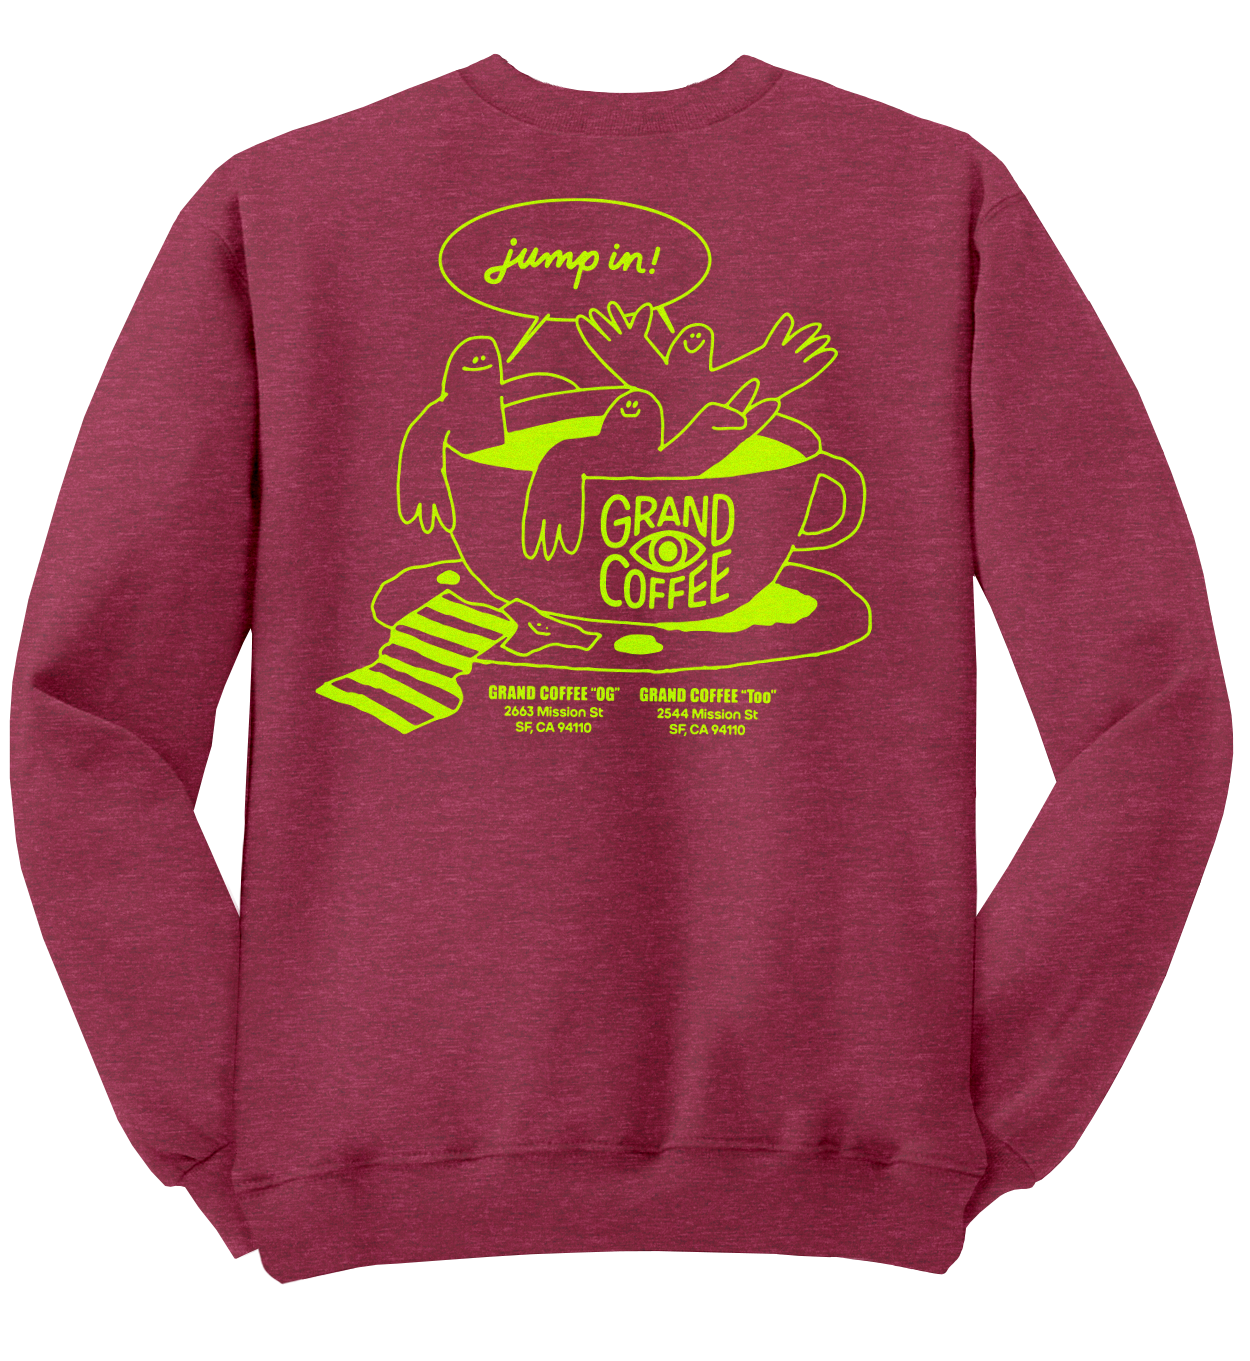 Skinny Dippers T-Shirt (Prairie Dust) – Grand Coffee SF